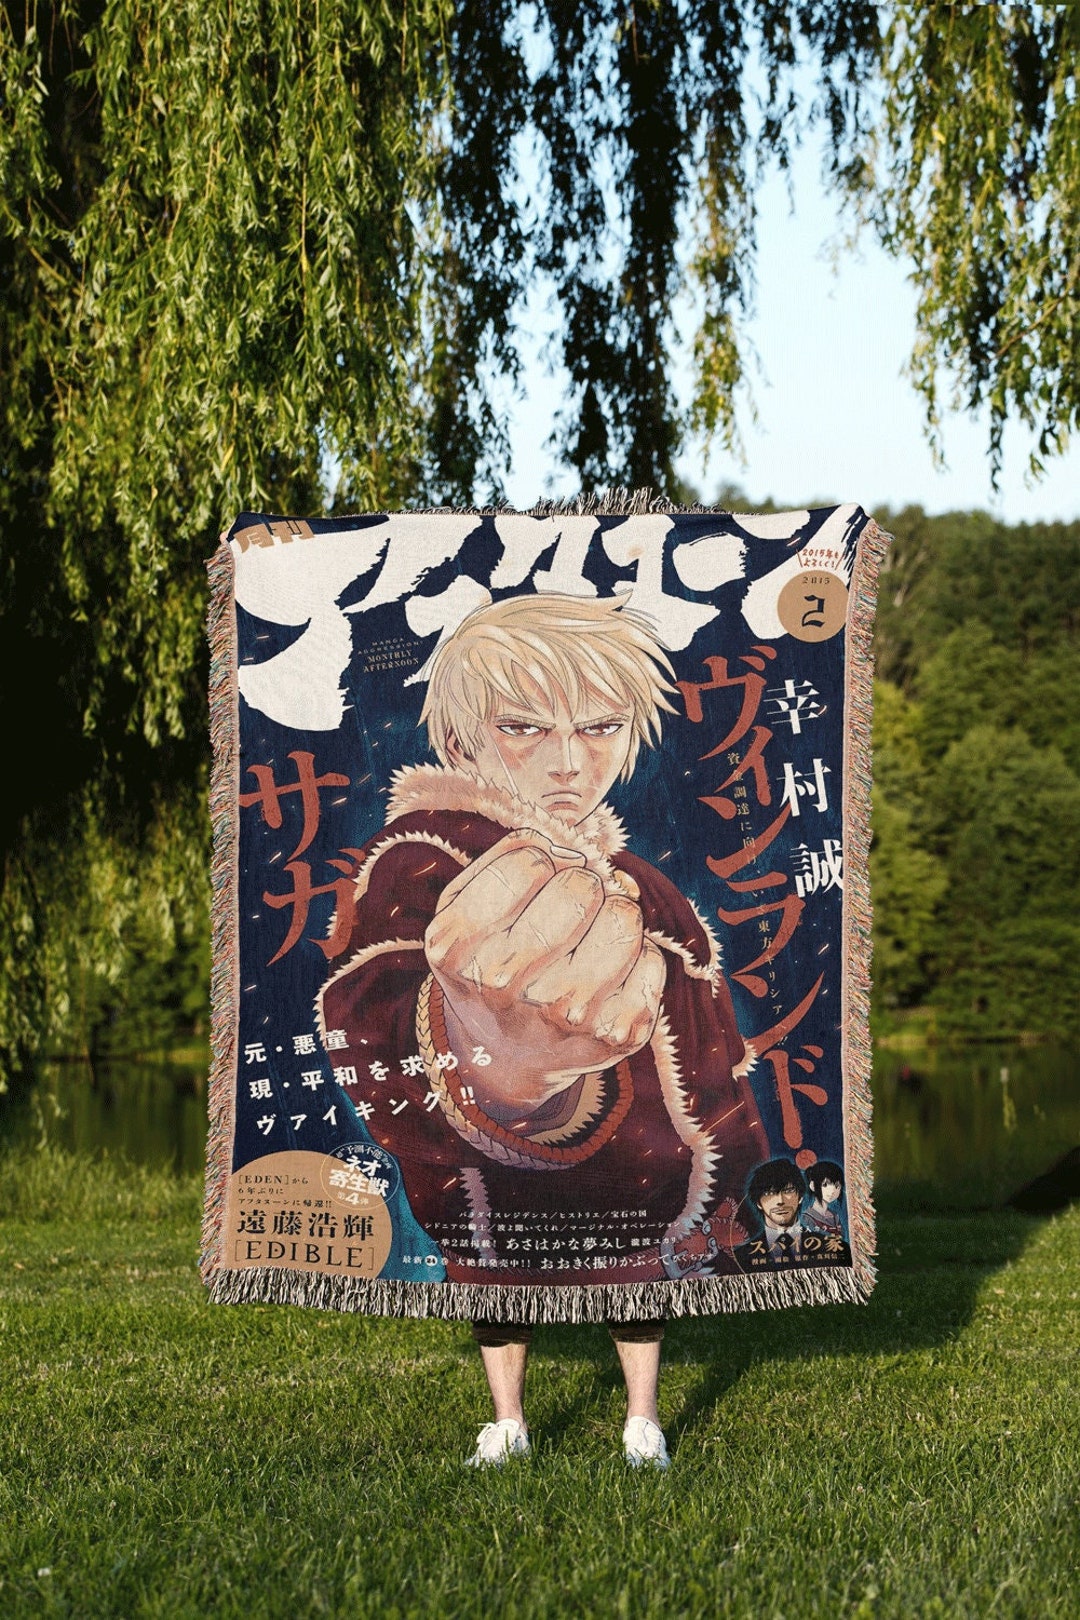 Details more than 79 blanket anime latest - highschoolcanada.edu.vn